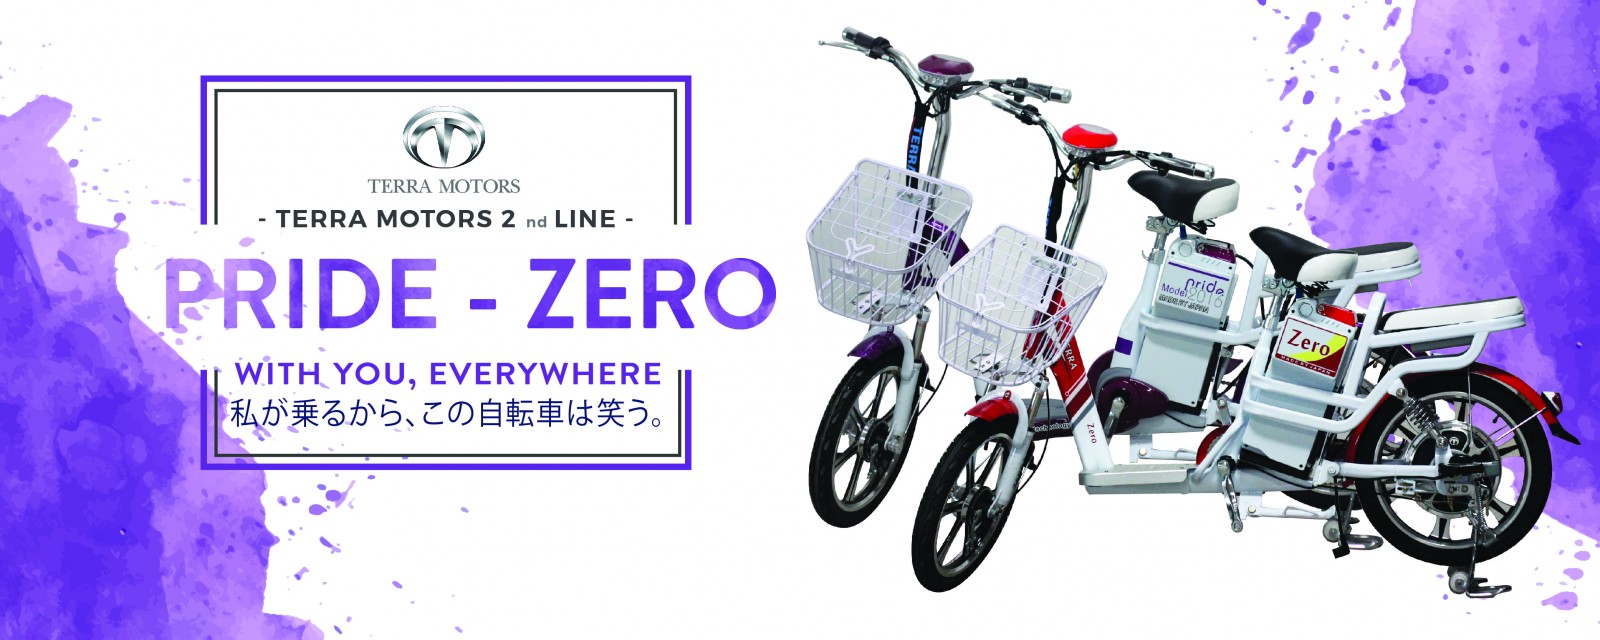 Xe đạp điện Zero Terra Motors 